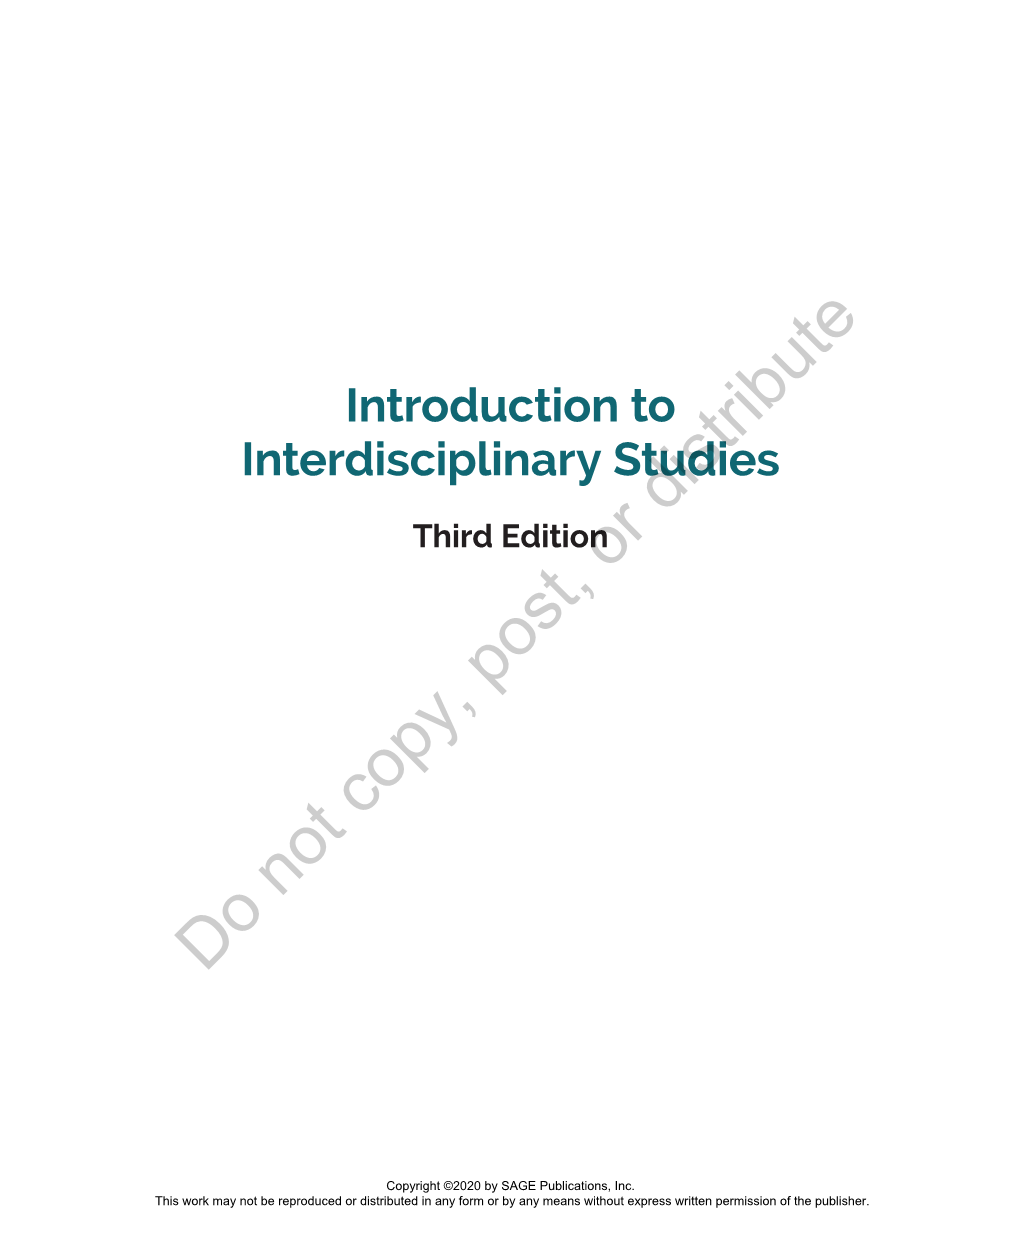 Introduction to Interdisciplinary Studies Distribute Third Editionor